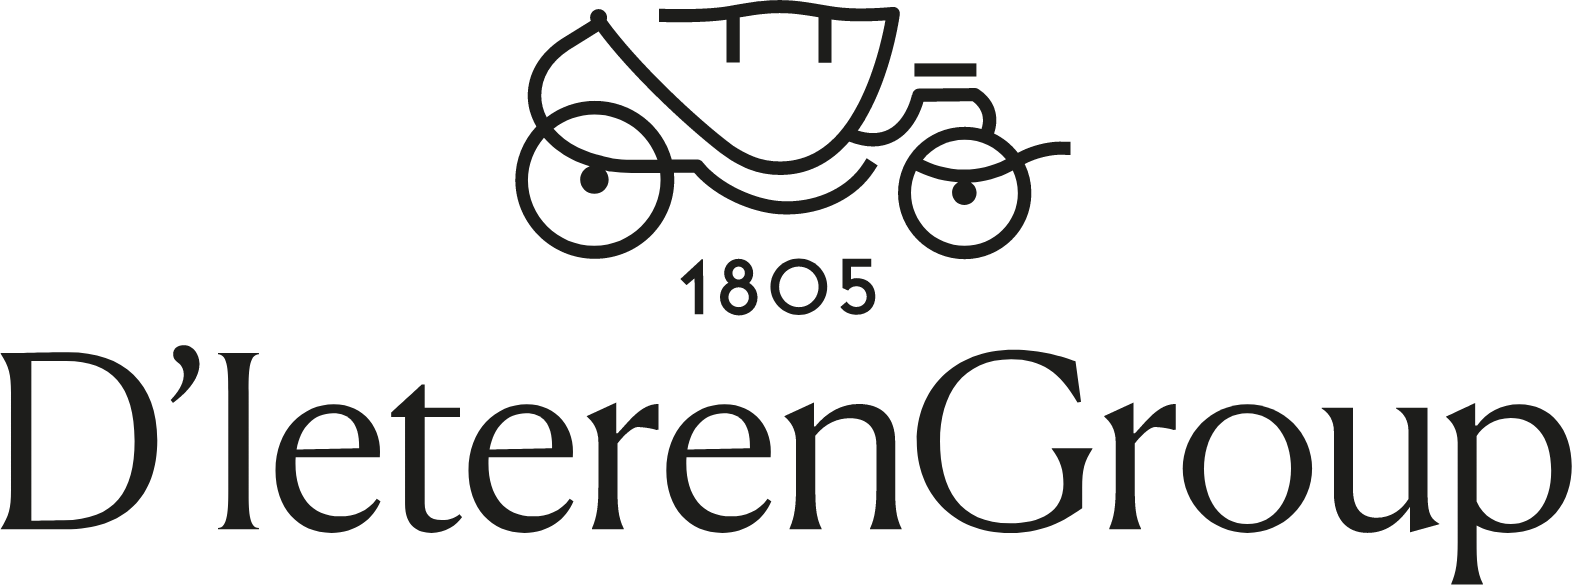 D'Ieteren Group logo large (transparent PNG)